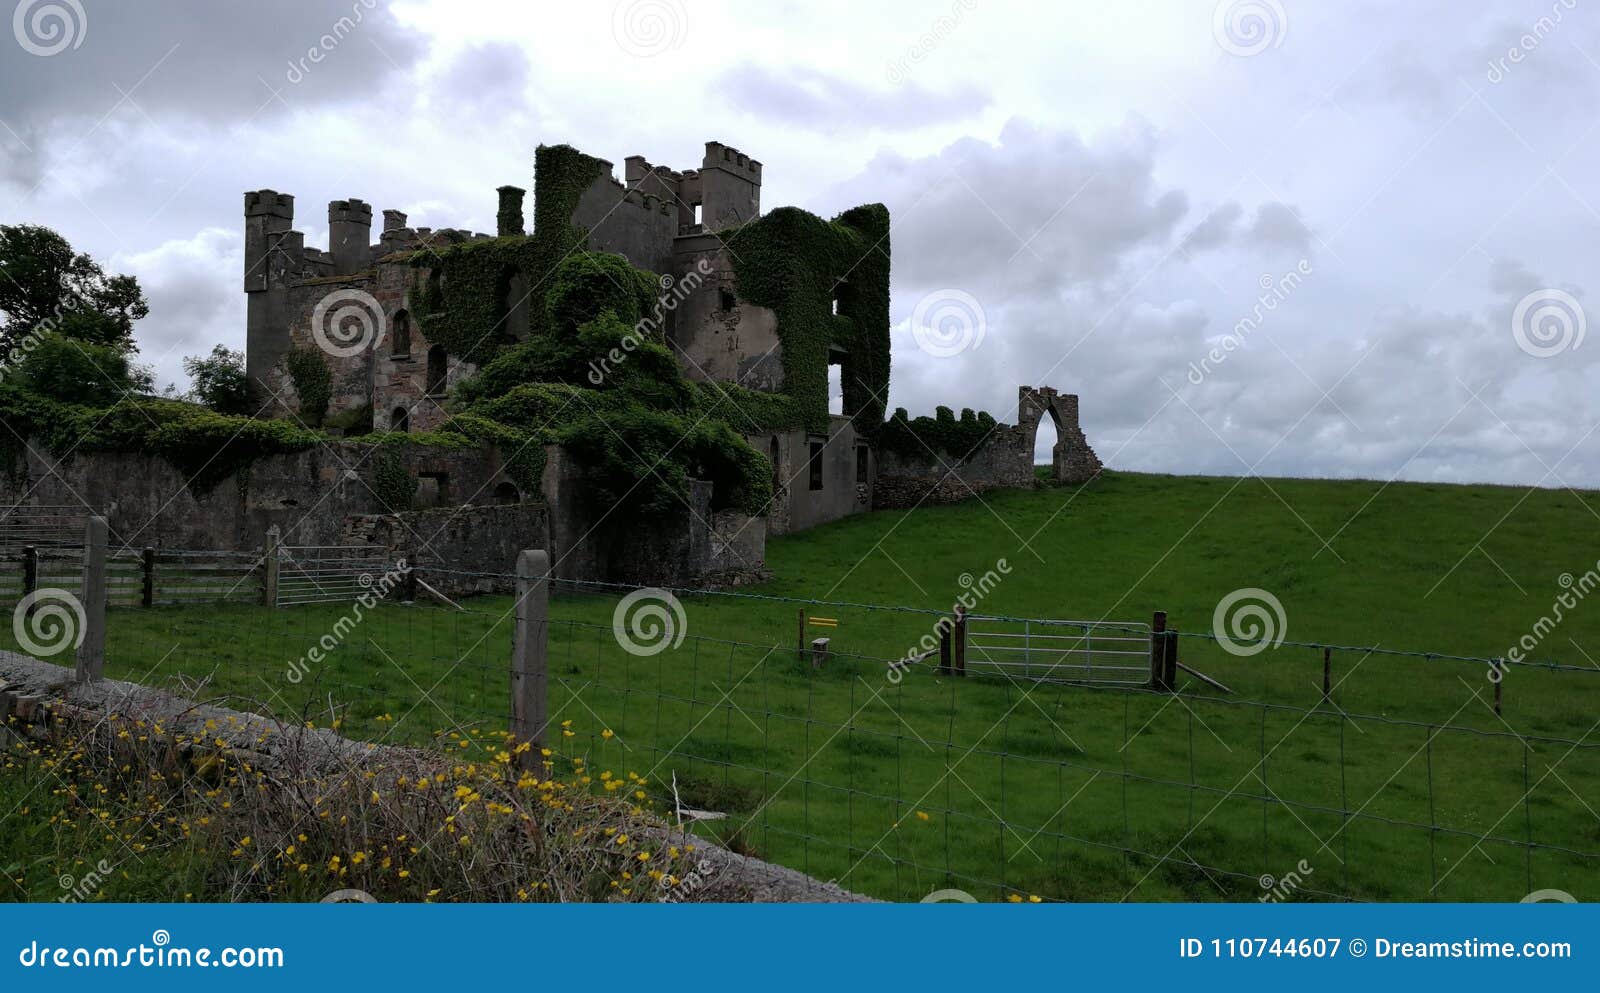 irish castle storm rain